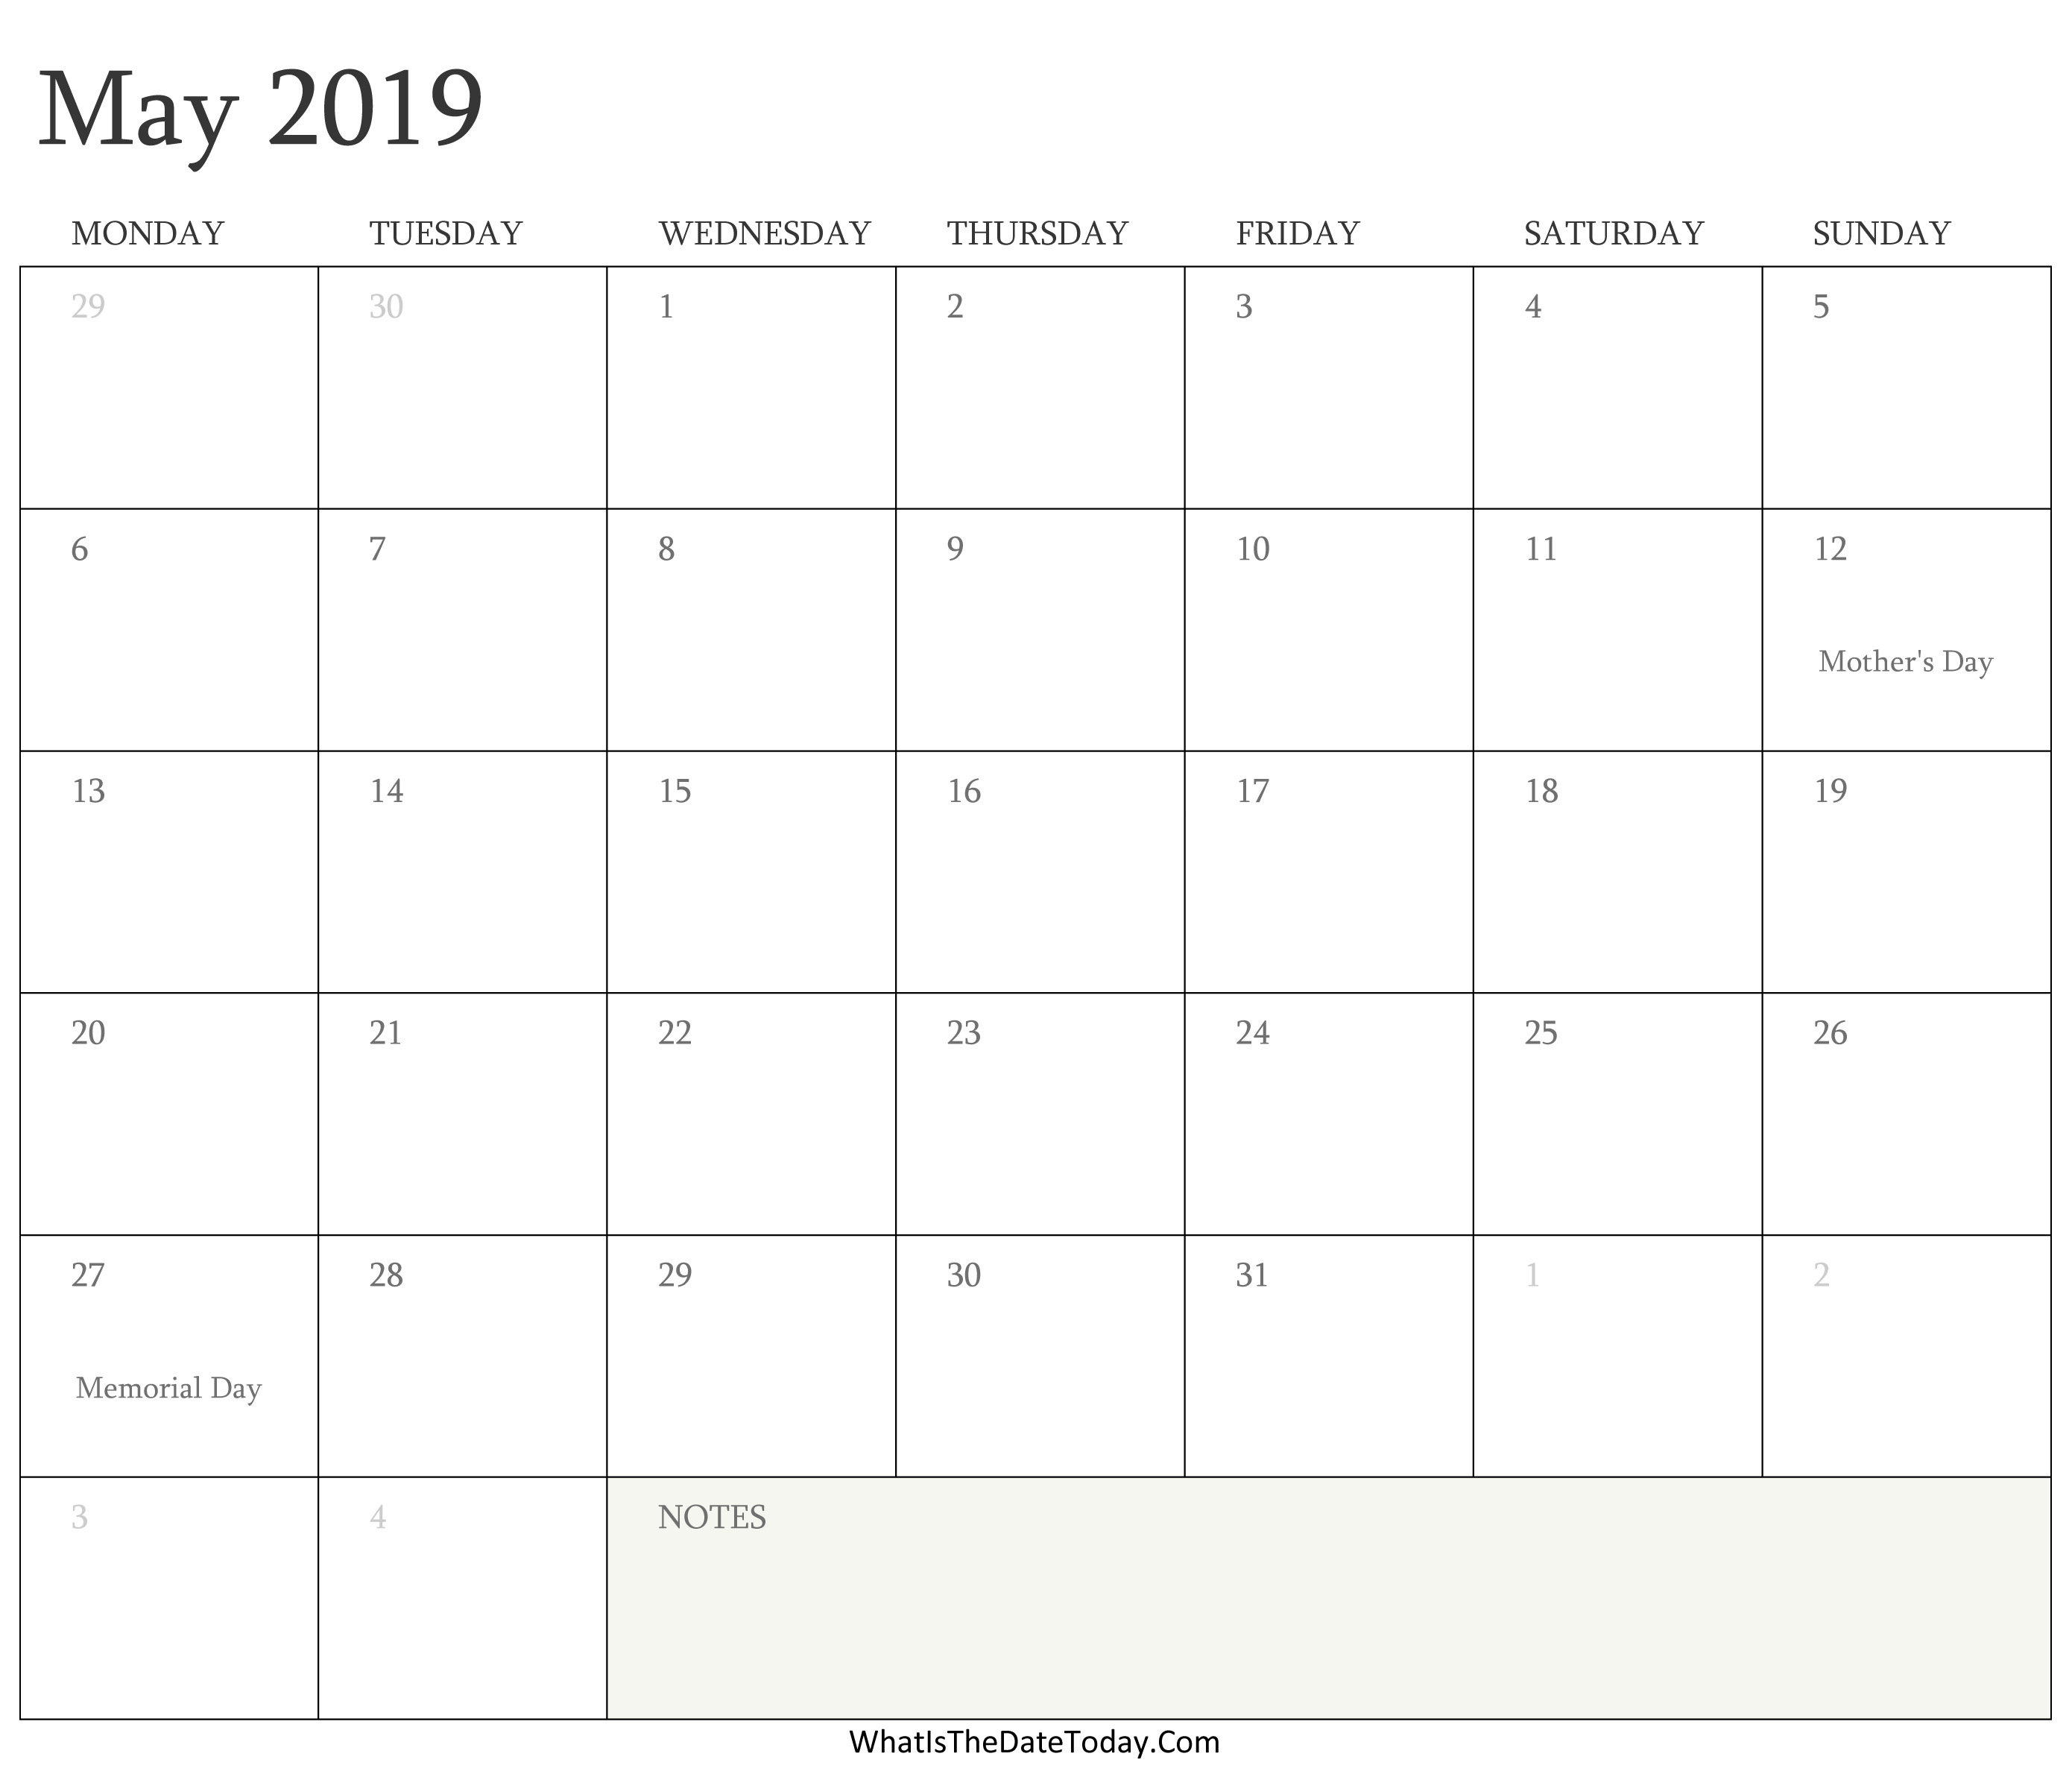 editable-calendar-may-2019-with-holidays-whatisthedatetoday-com